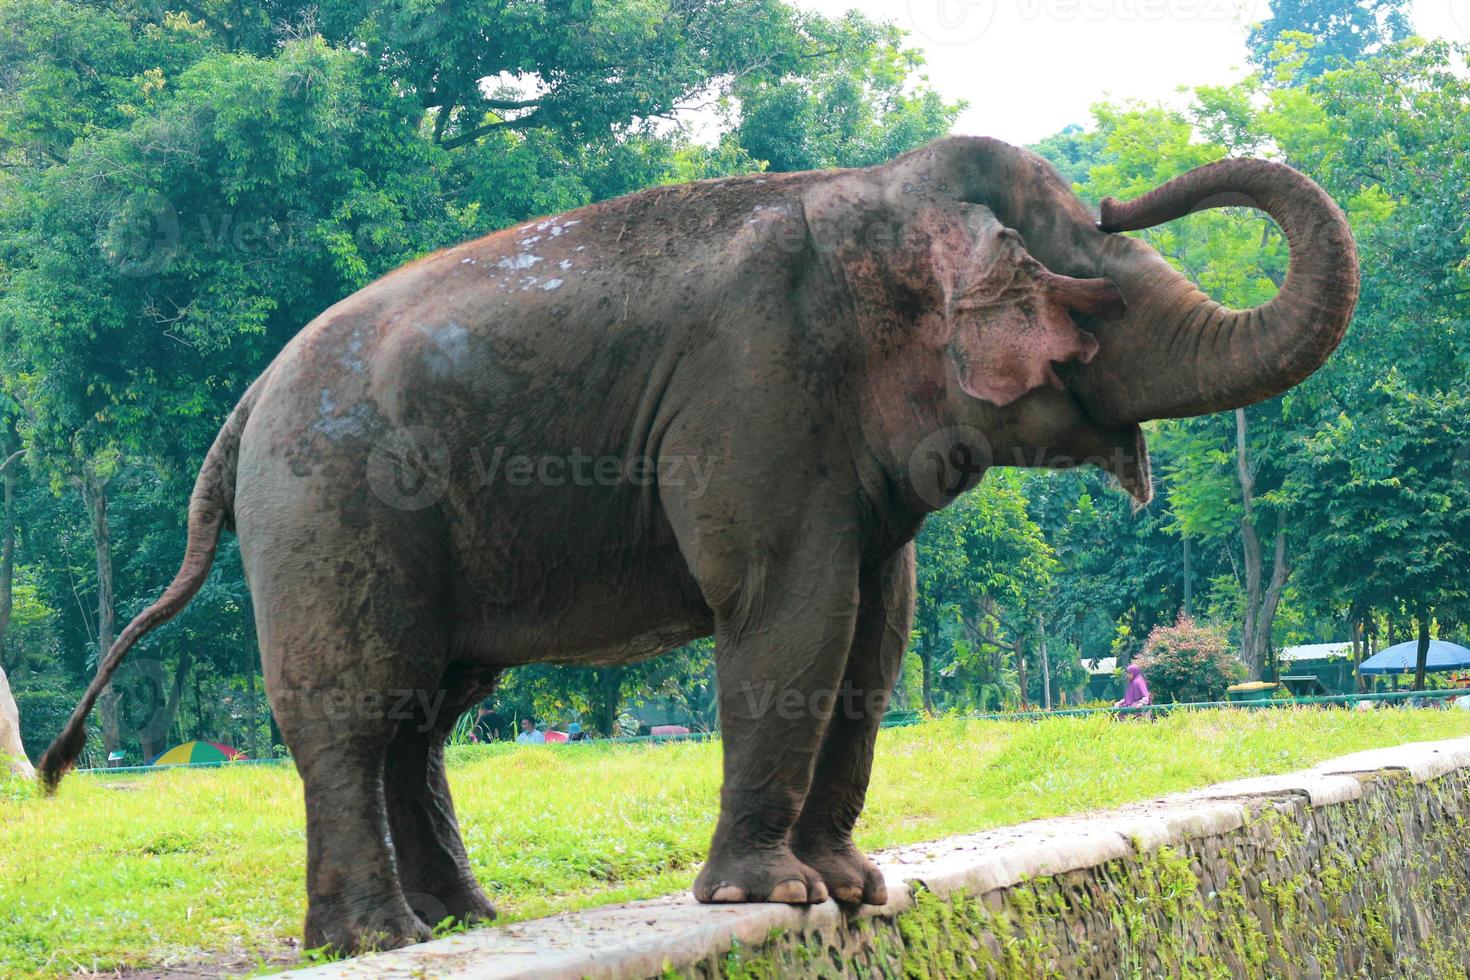 sumatran olifant olifant maximus sumatranus in de ragunan dieren in het wild park of ragunan dierentuin foto